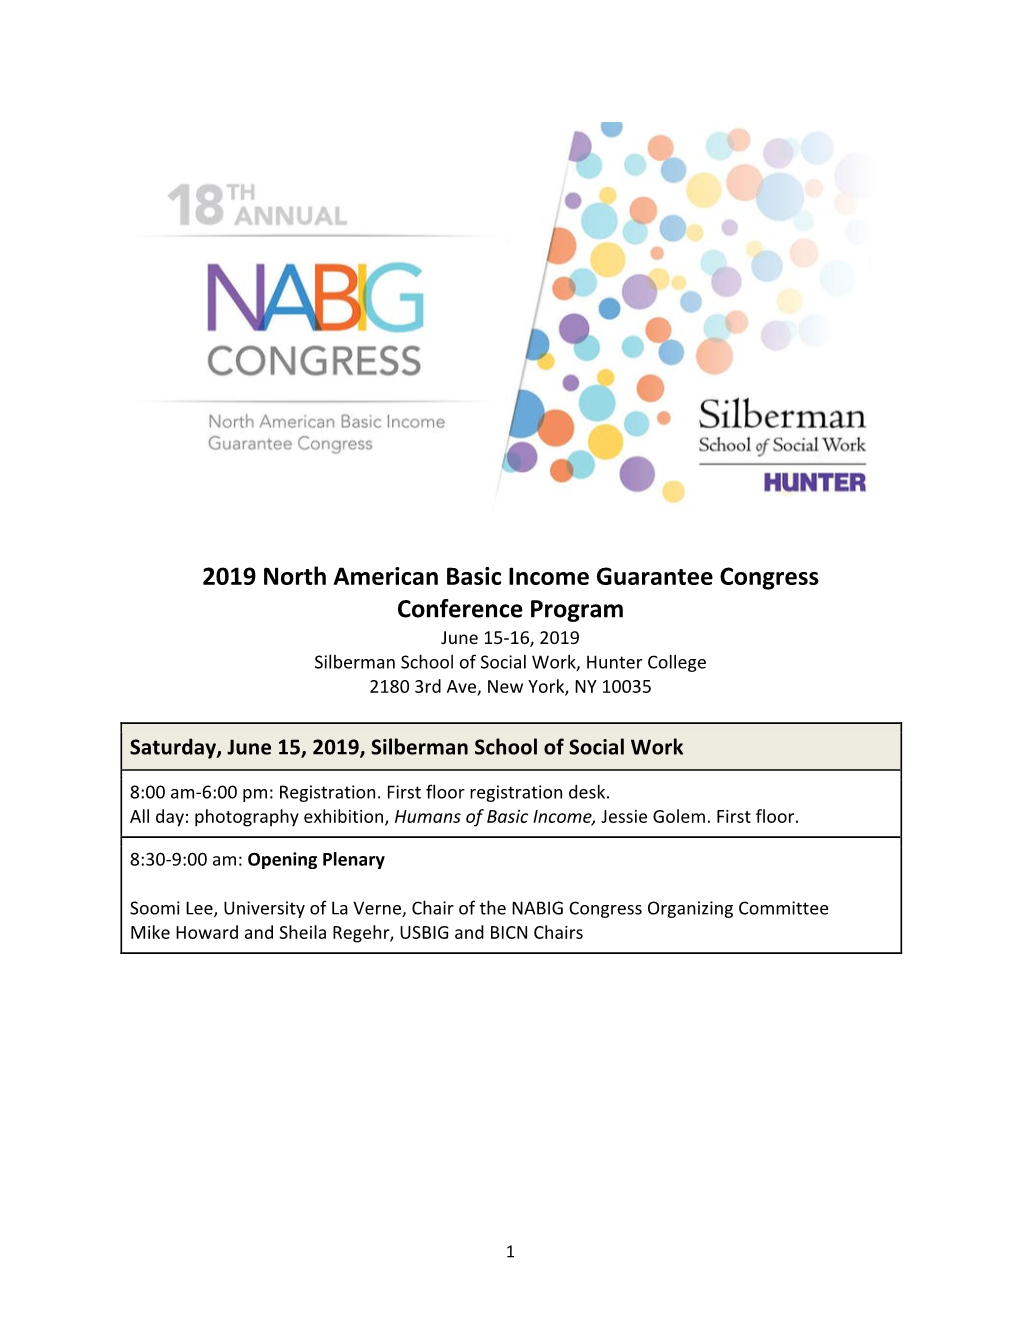 2019 North American Basic Income Guarantee Congress Conference